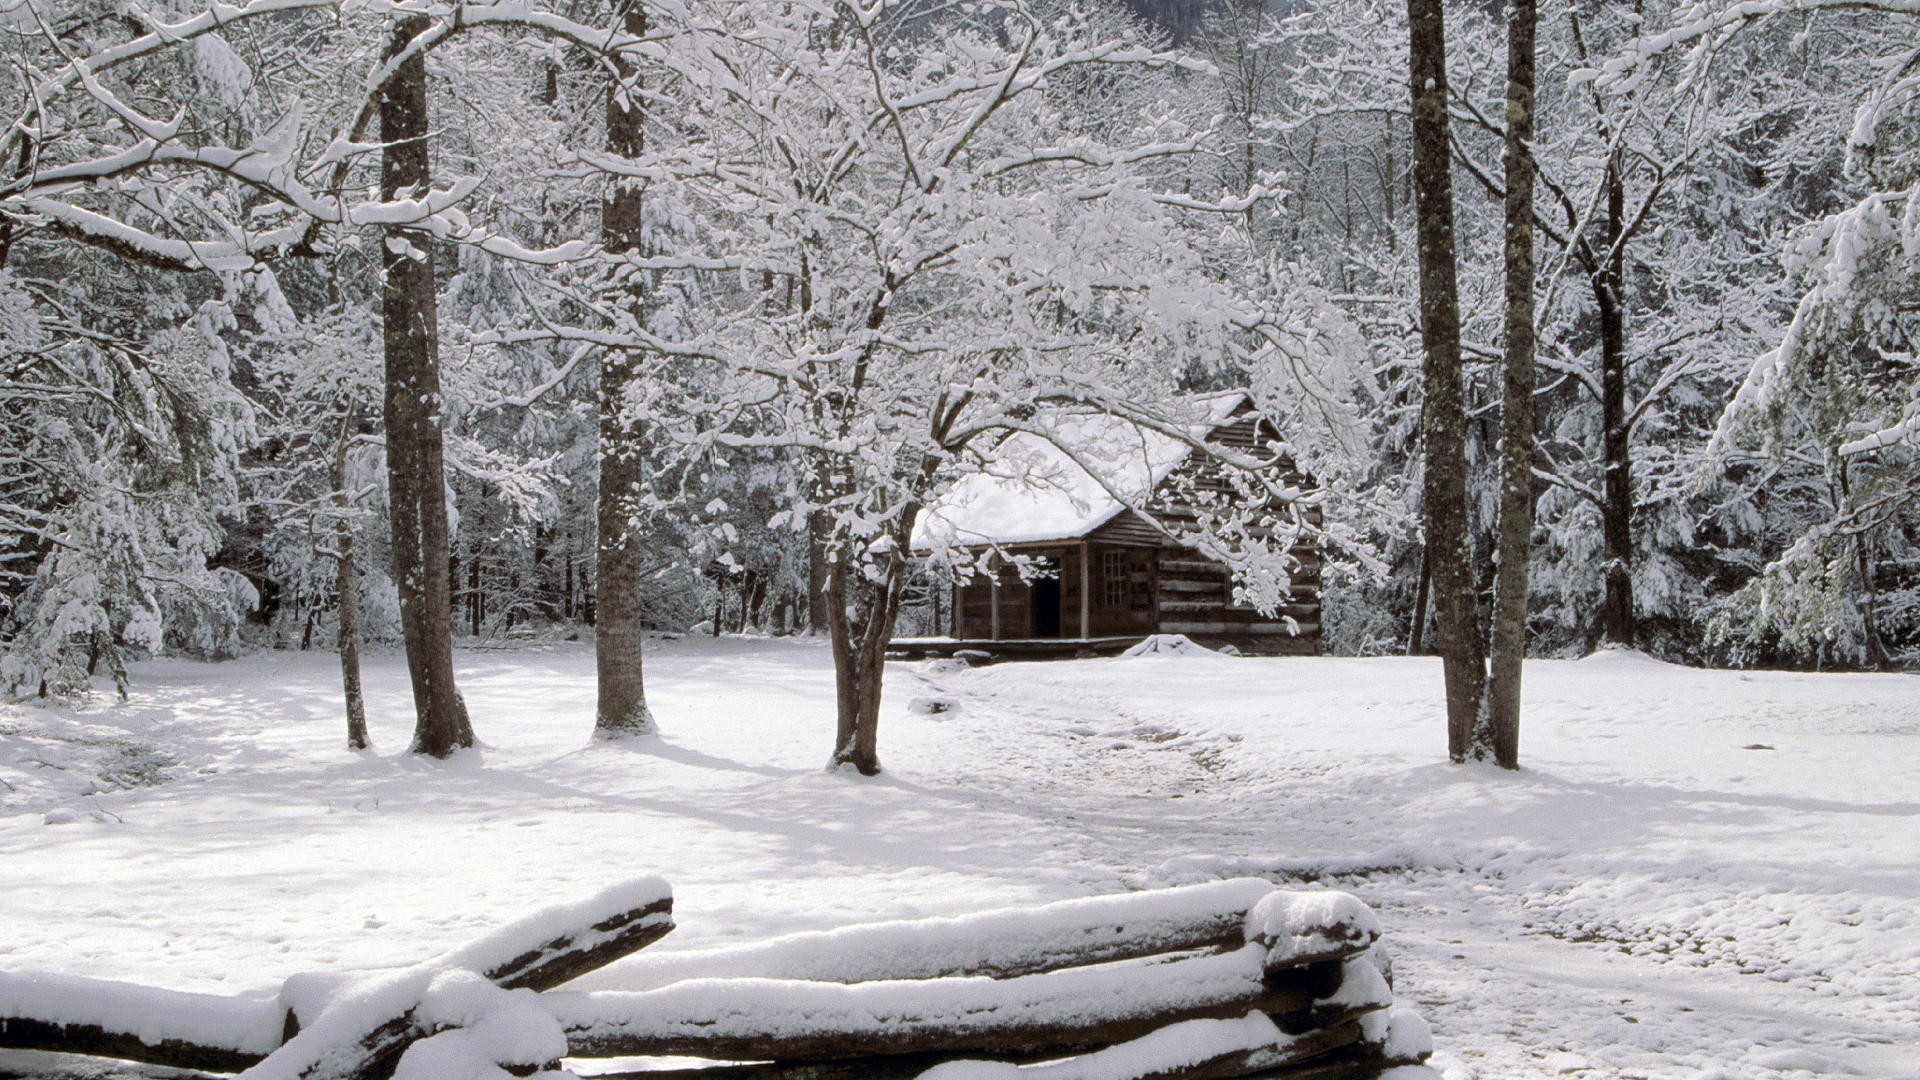 39273-winter-cabin-woods1920x1200.jpg